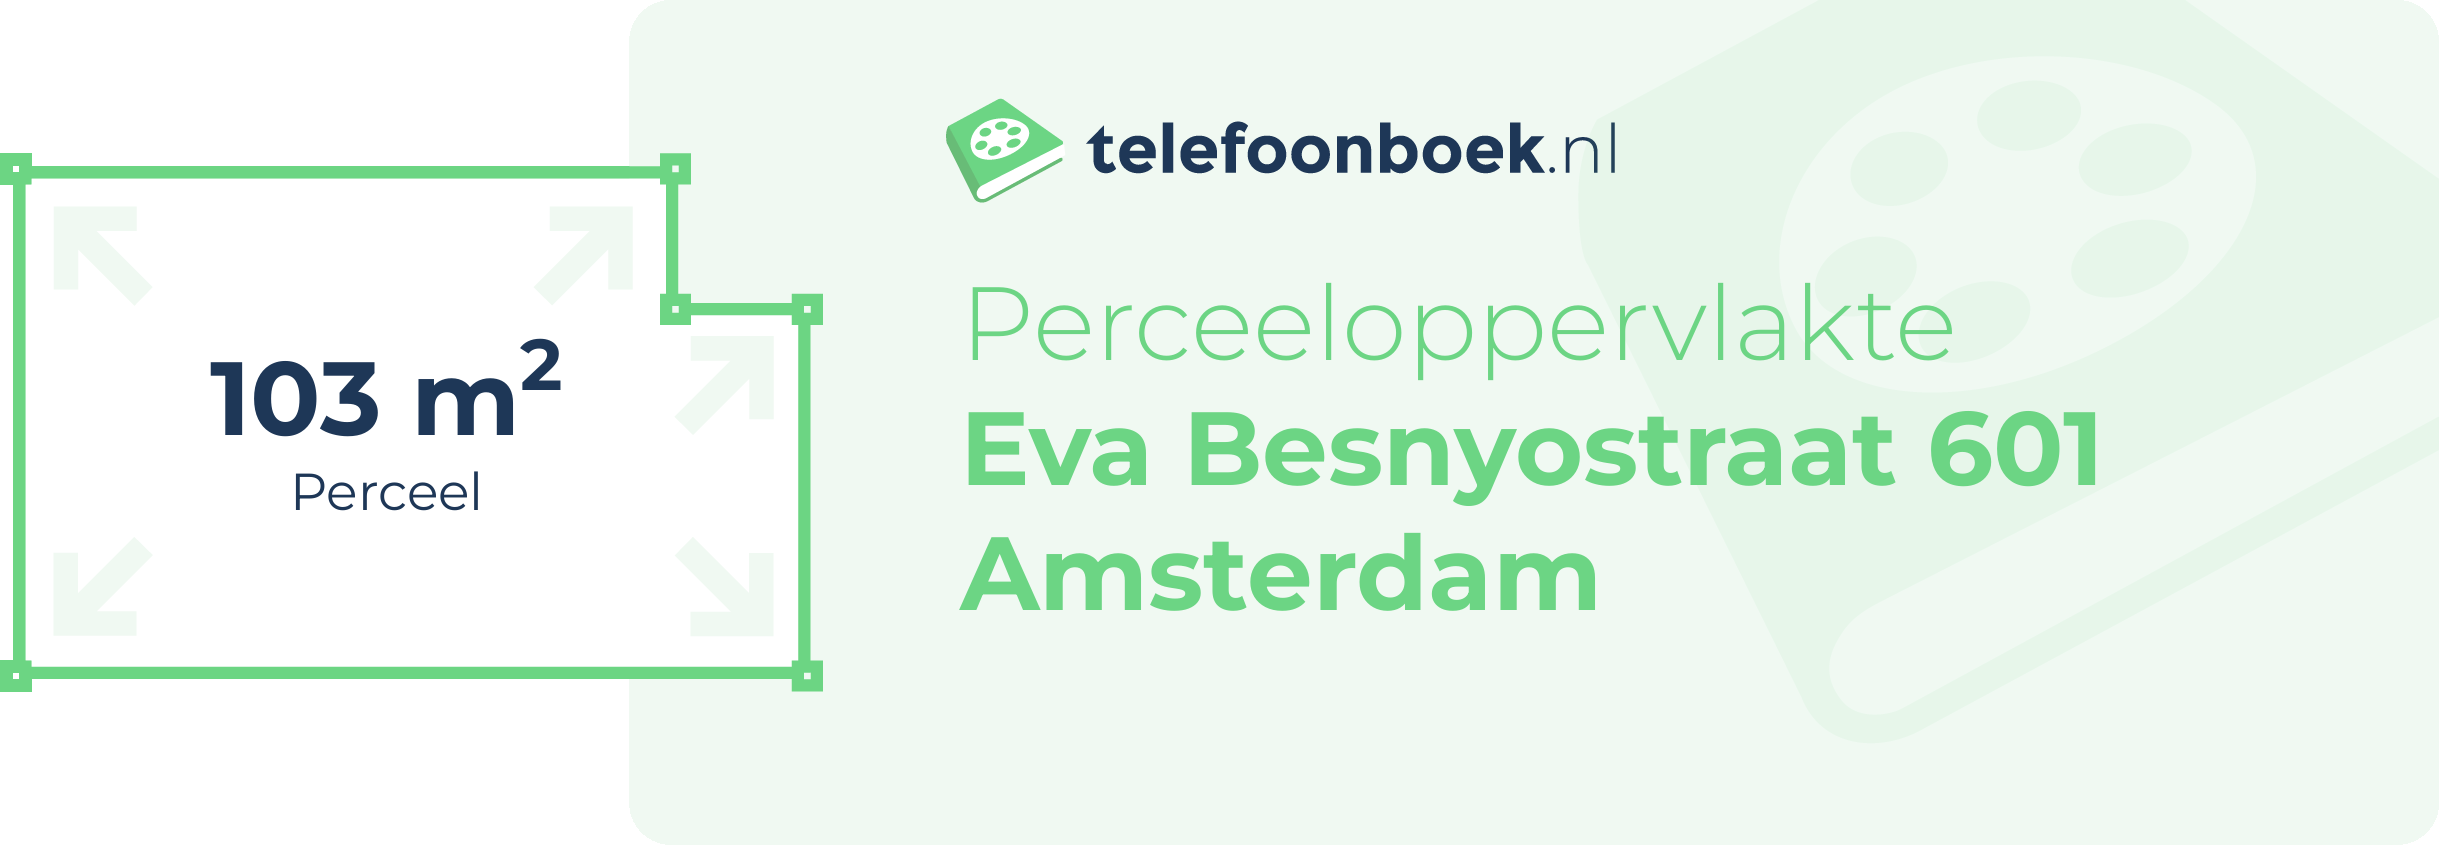 Perceeloppervlakte Eva Besnyostraat 601 Amsterdam